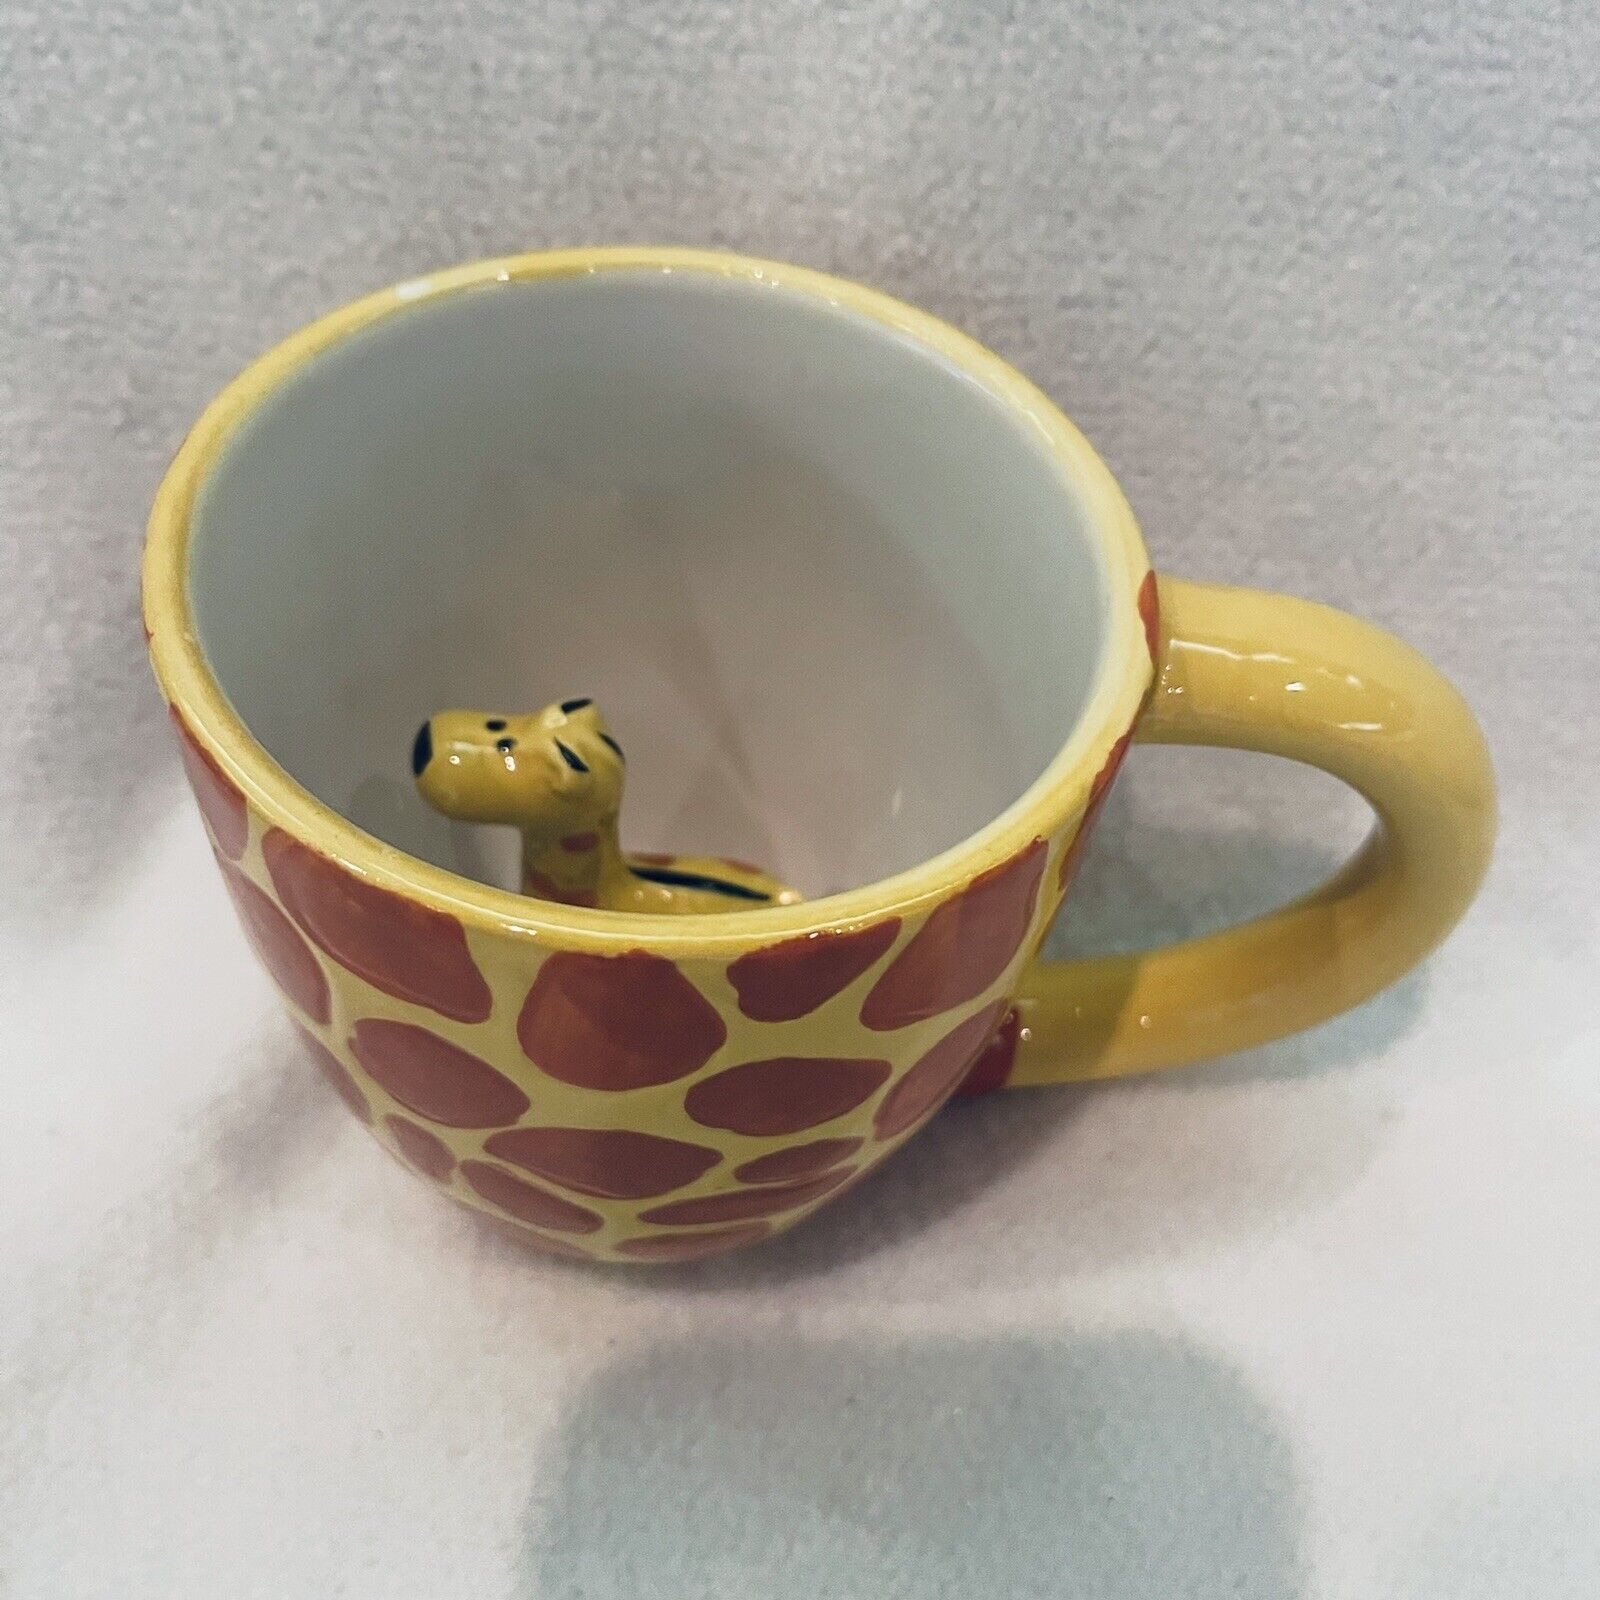 Ceramic World Market Giraffe Mug Yellow/ Brown Spots Giraffe Figure Inside Botto